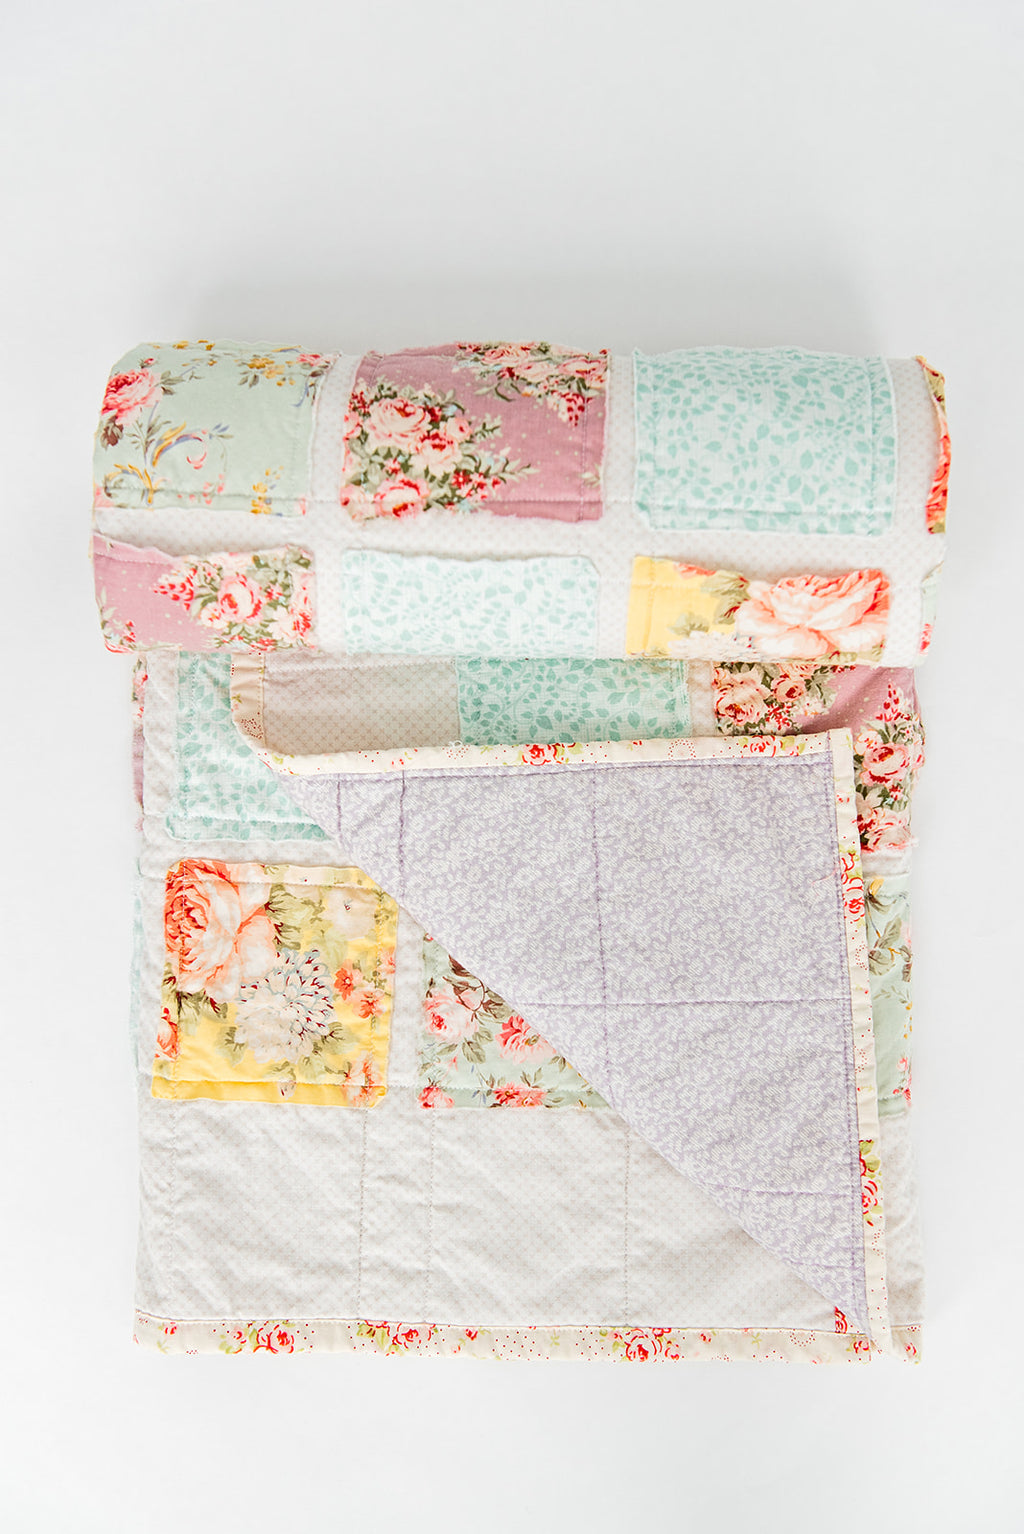 mint-pink-lavender-girly-floral-quilt-handmade-baby-blanket